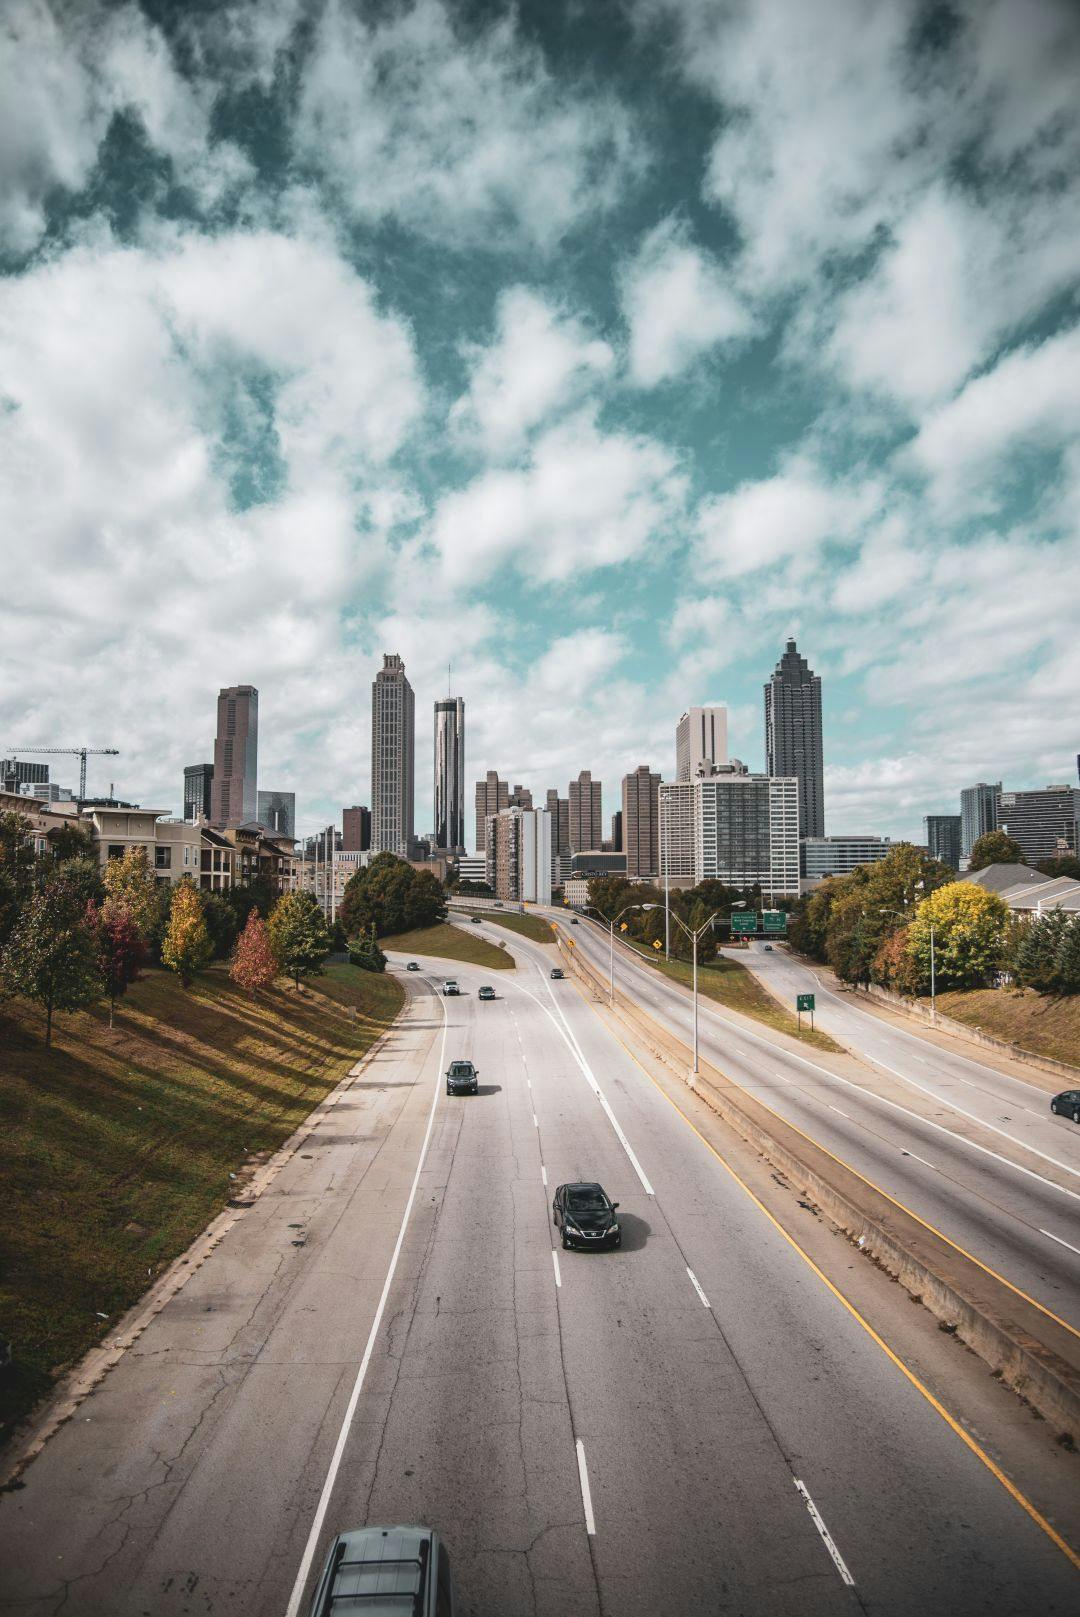 entering the city of Atlanta